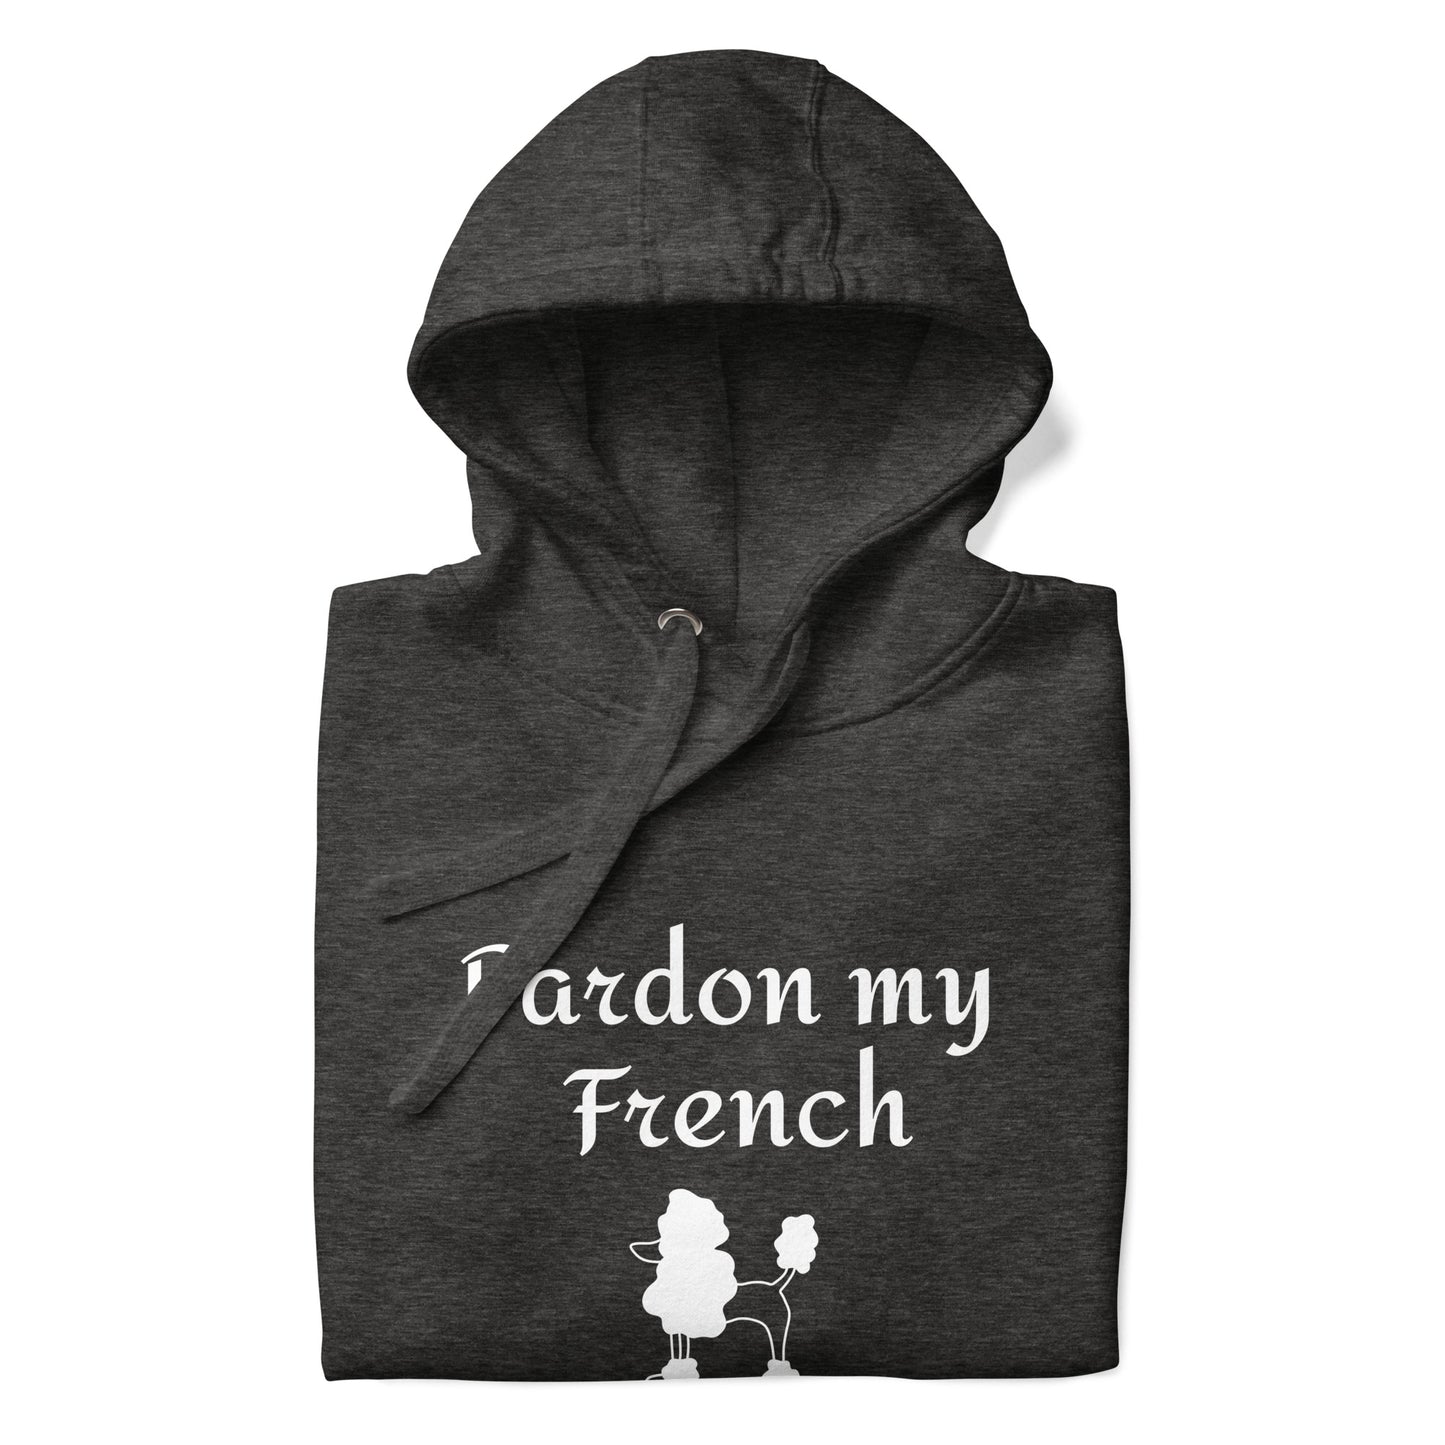 Pardon my French - Hoodie